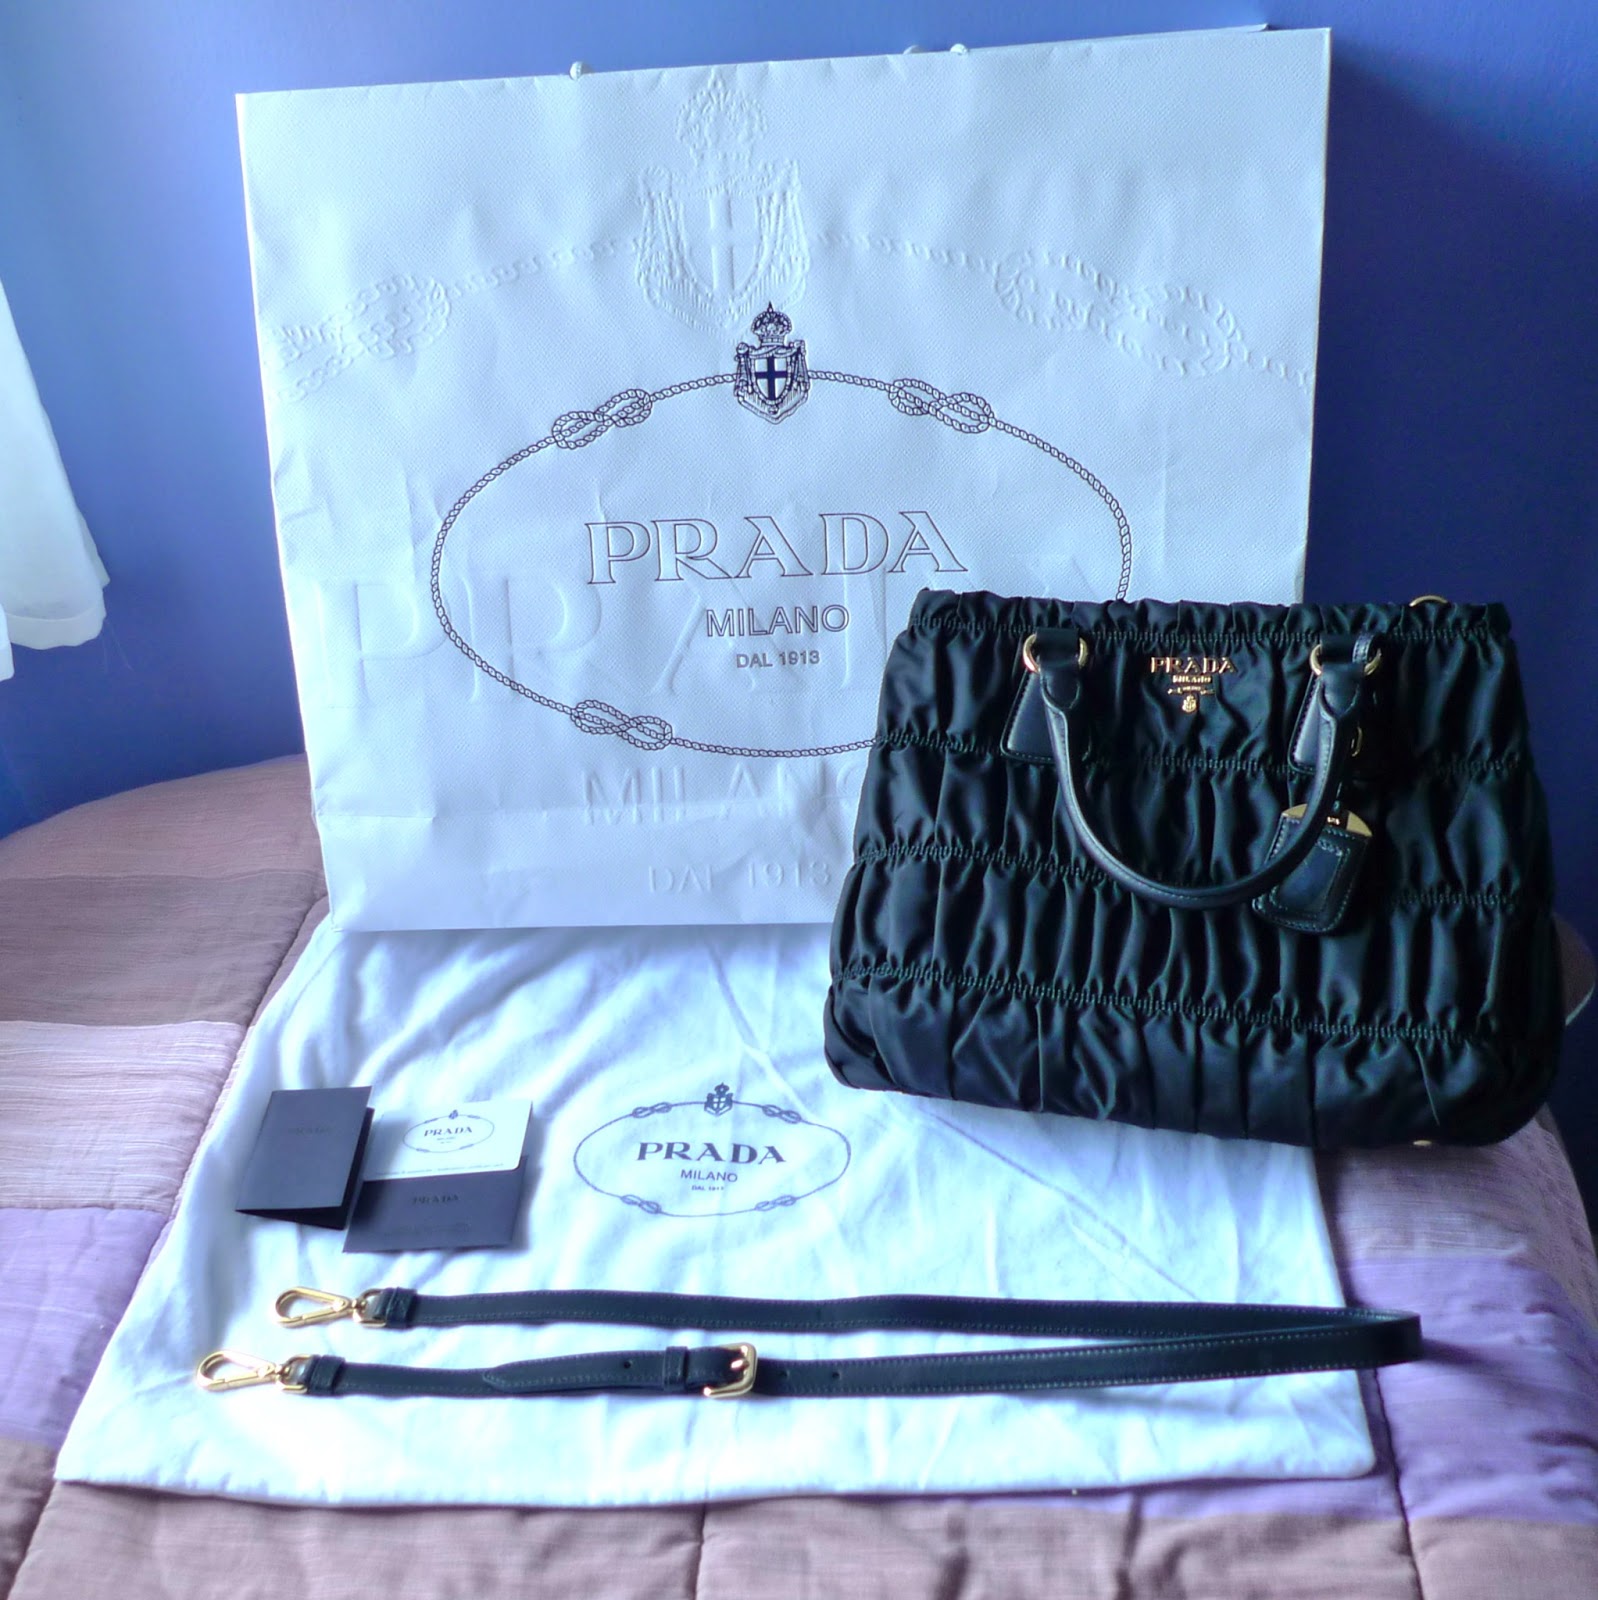 Prada - Authenticated Re-Nylon Handbag - Synthetic Beige Plain for Women, Good Condition